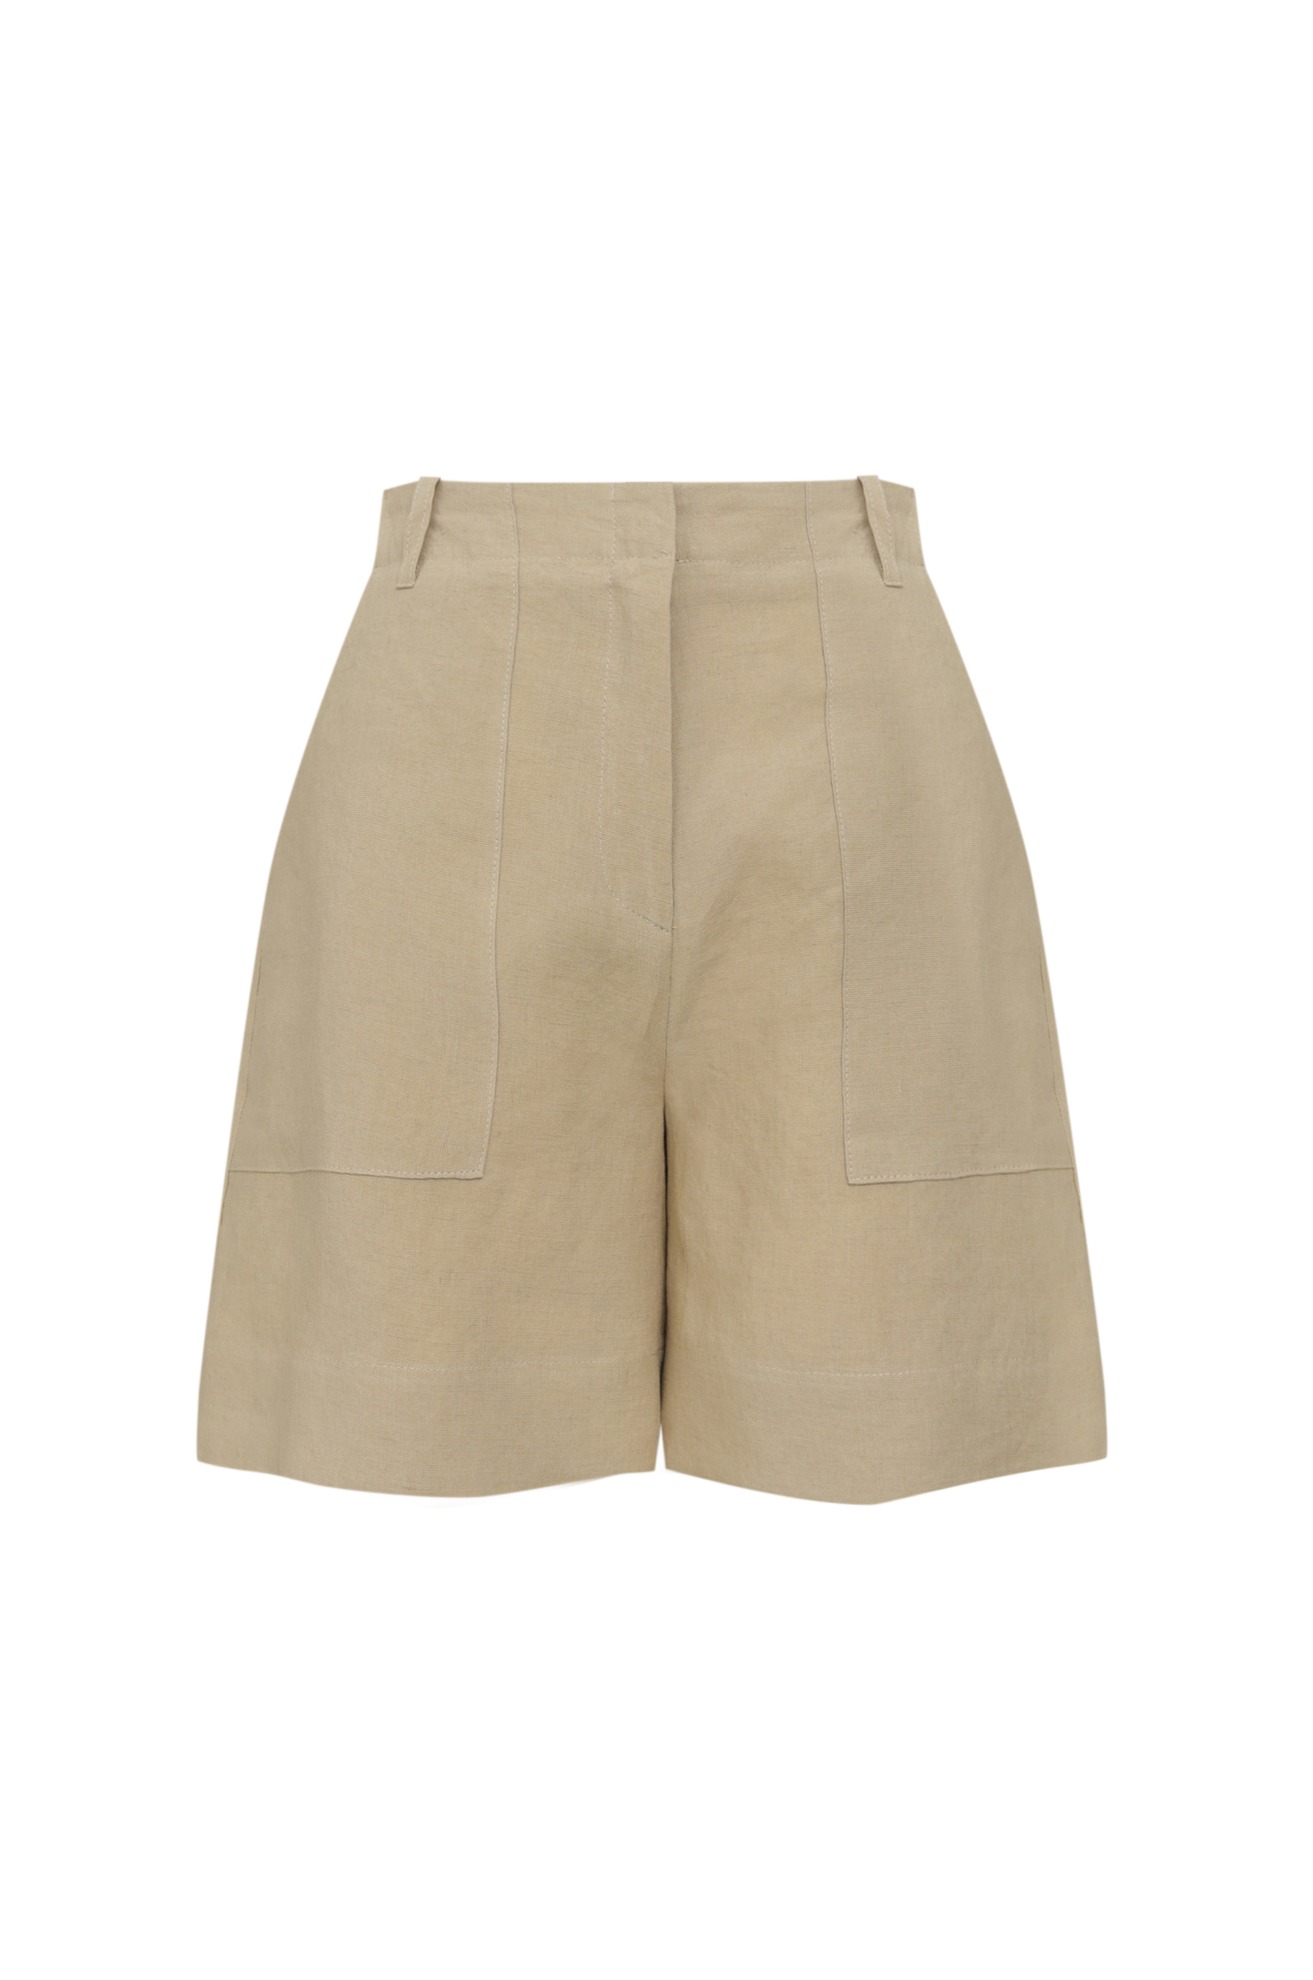 Simple Linen Shorts   6/7 순차발송